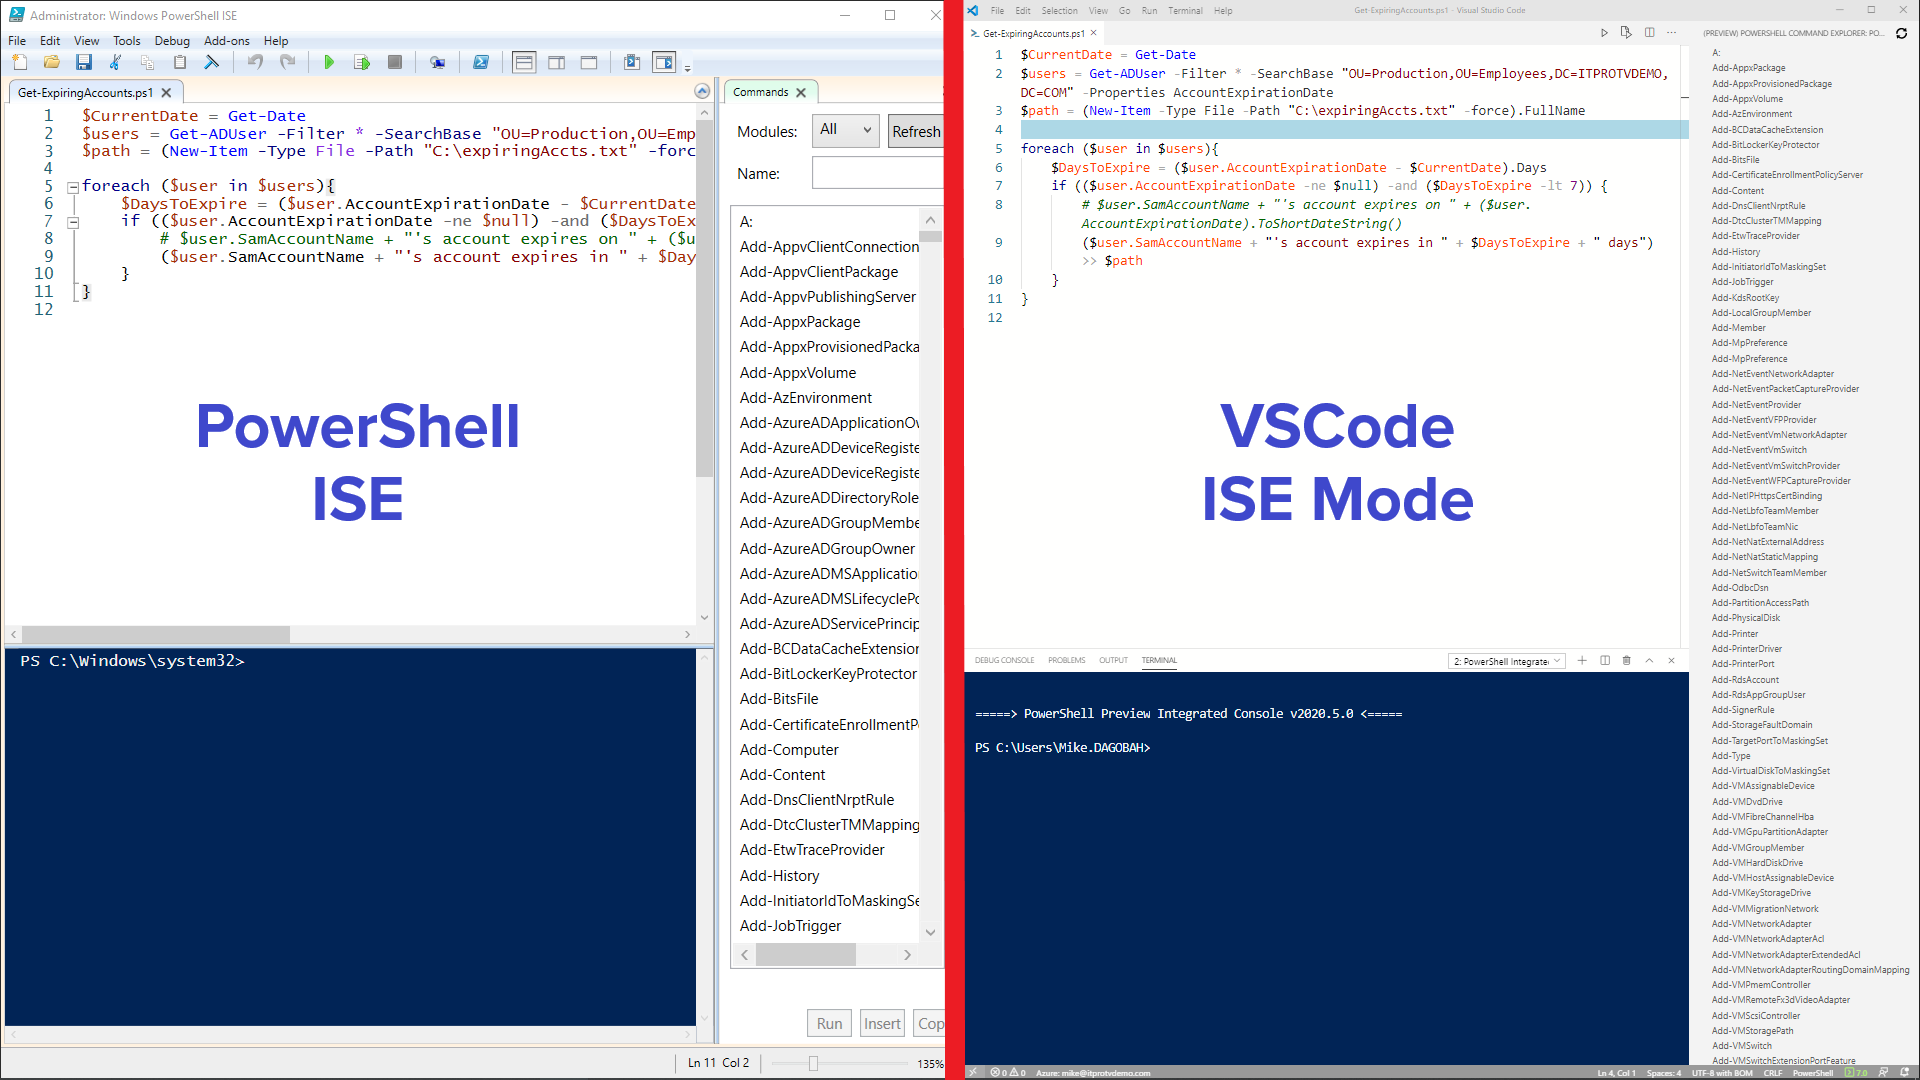 ISE VSCode comparison